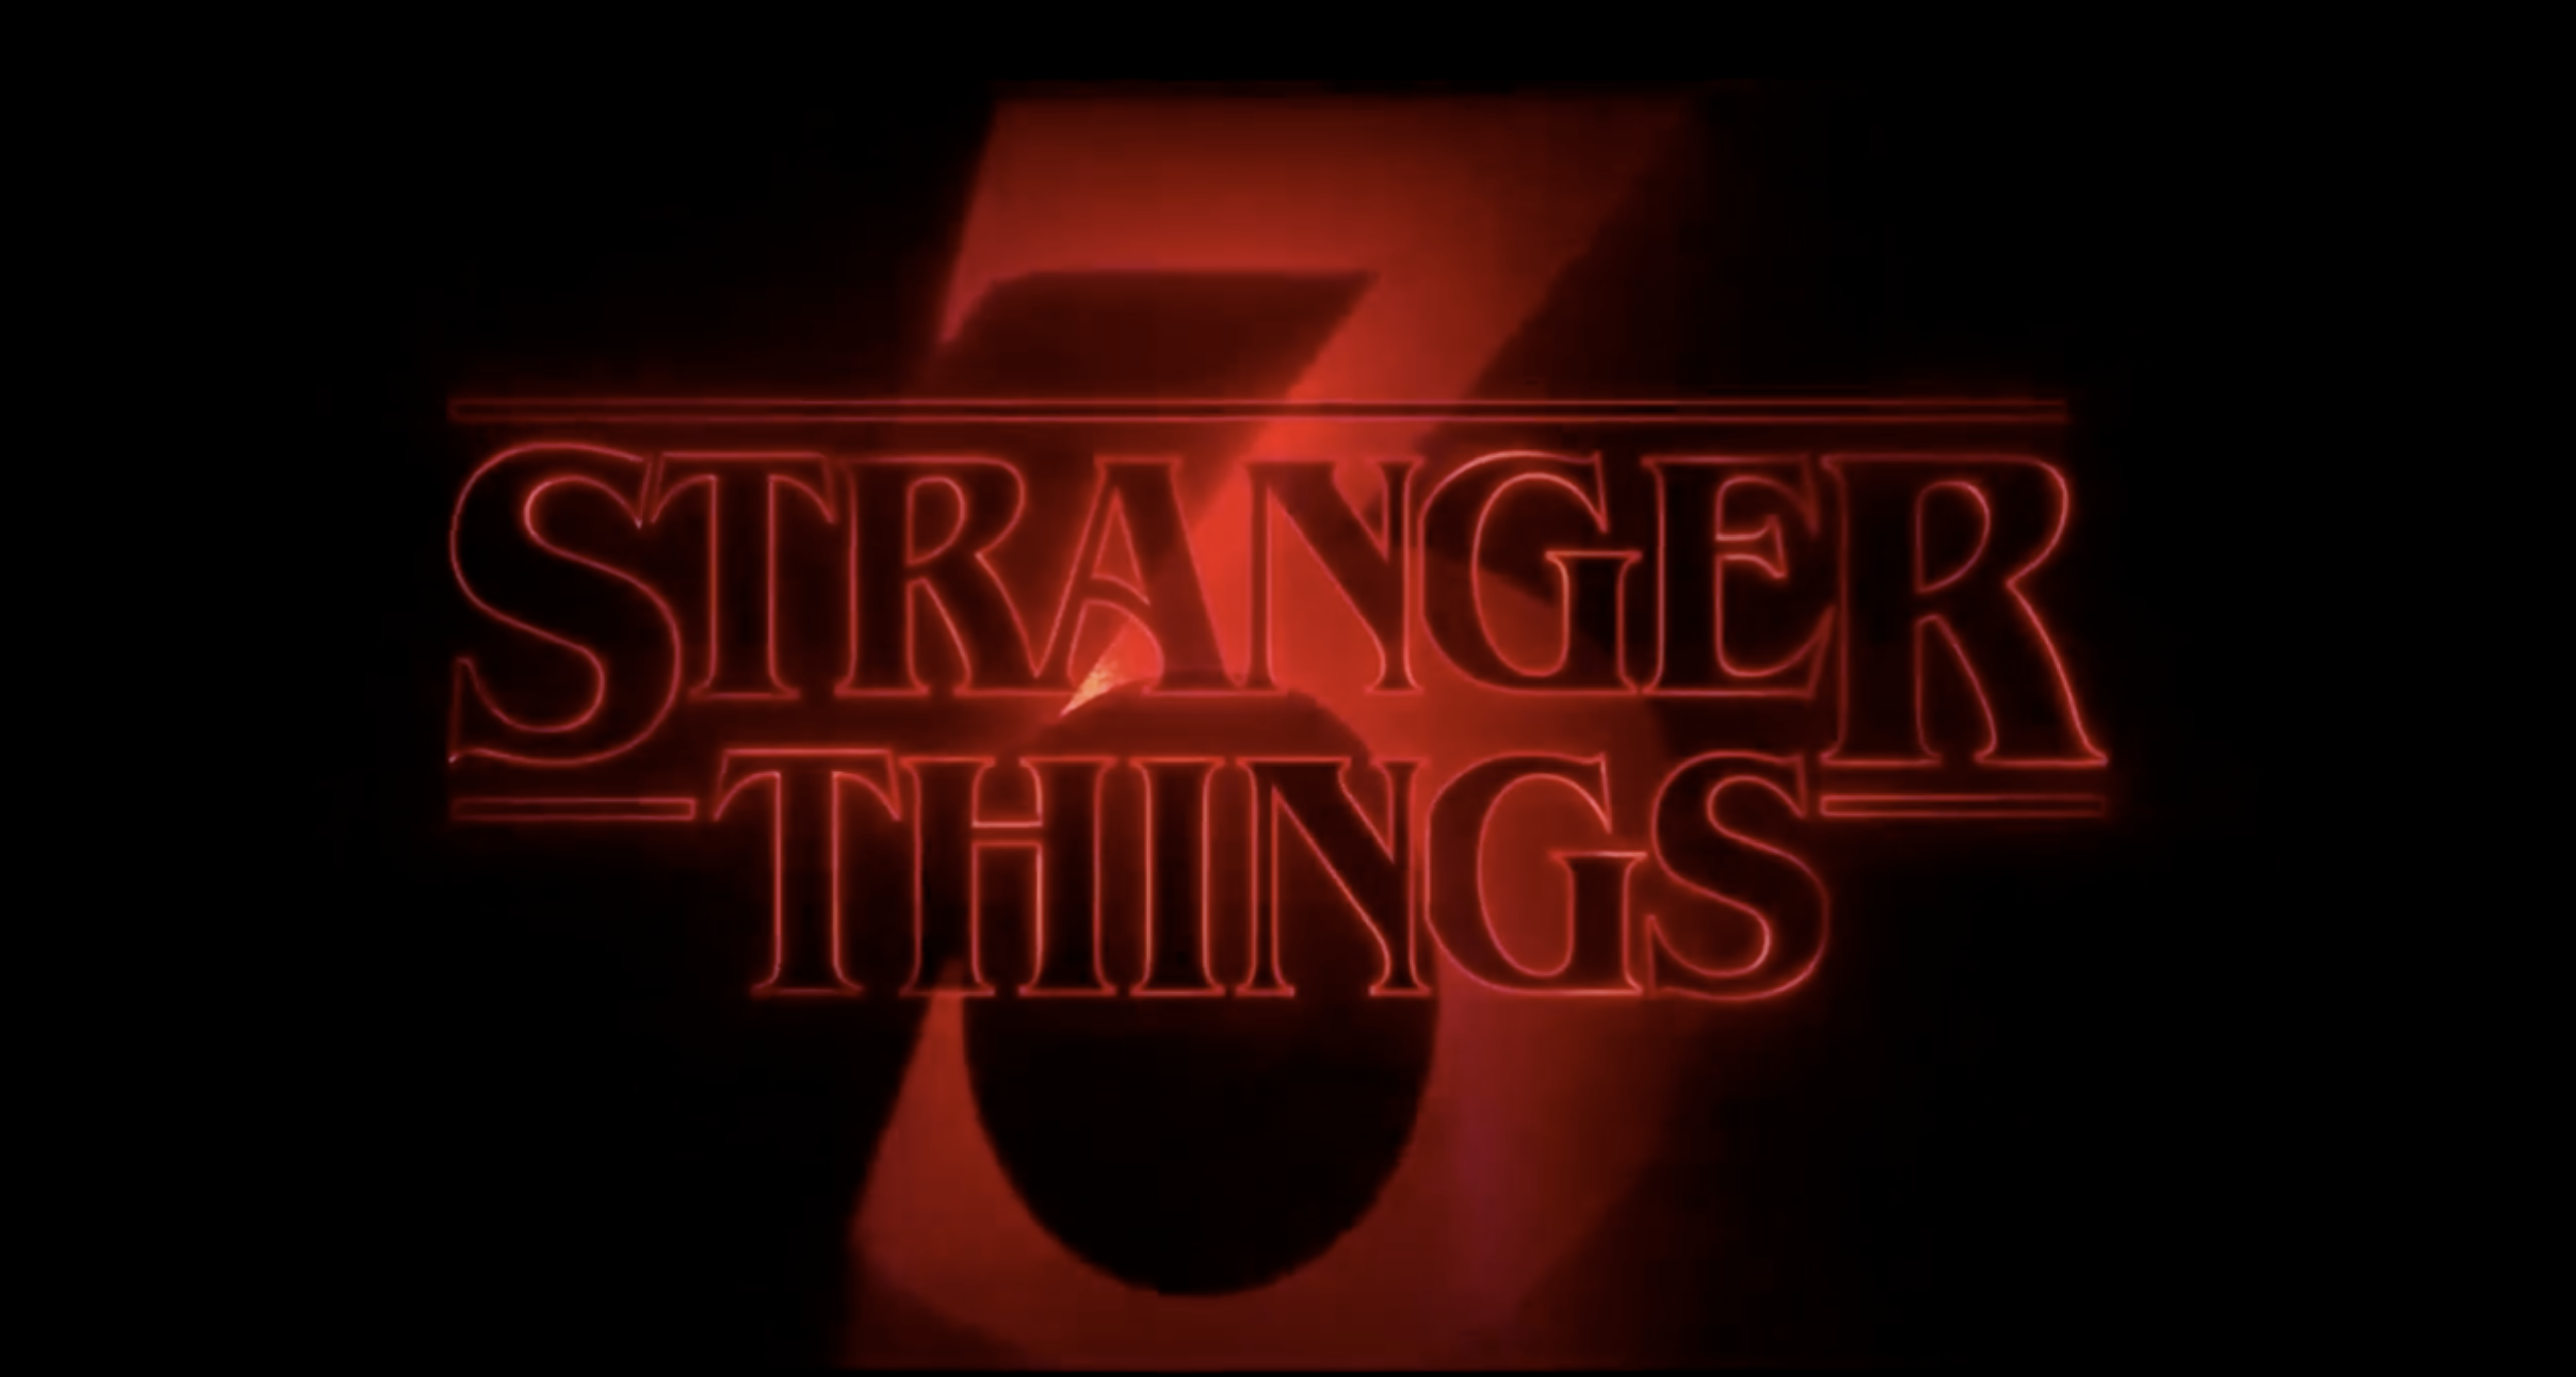 Stranger Things Season 3 release date